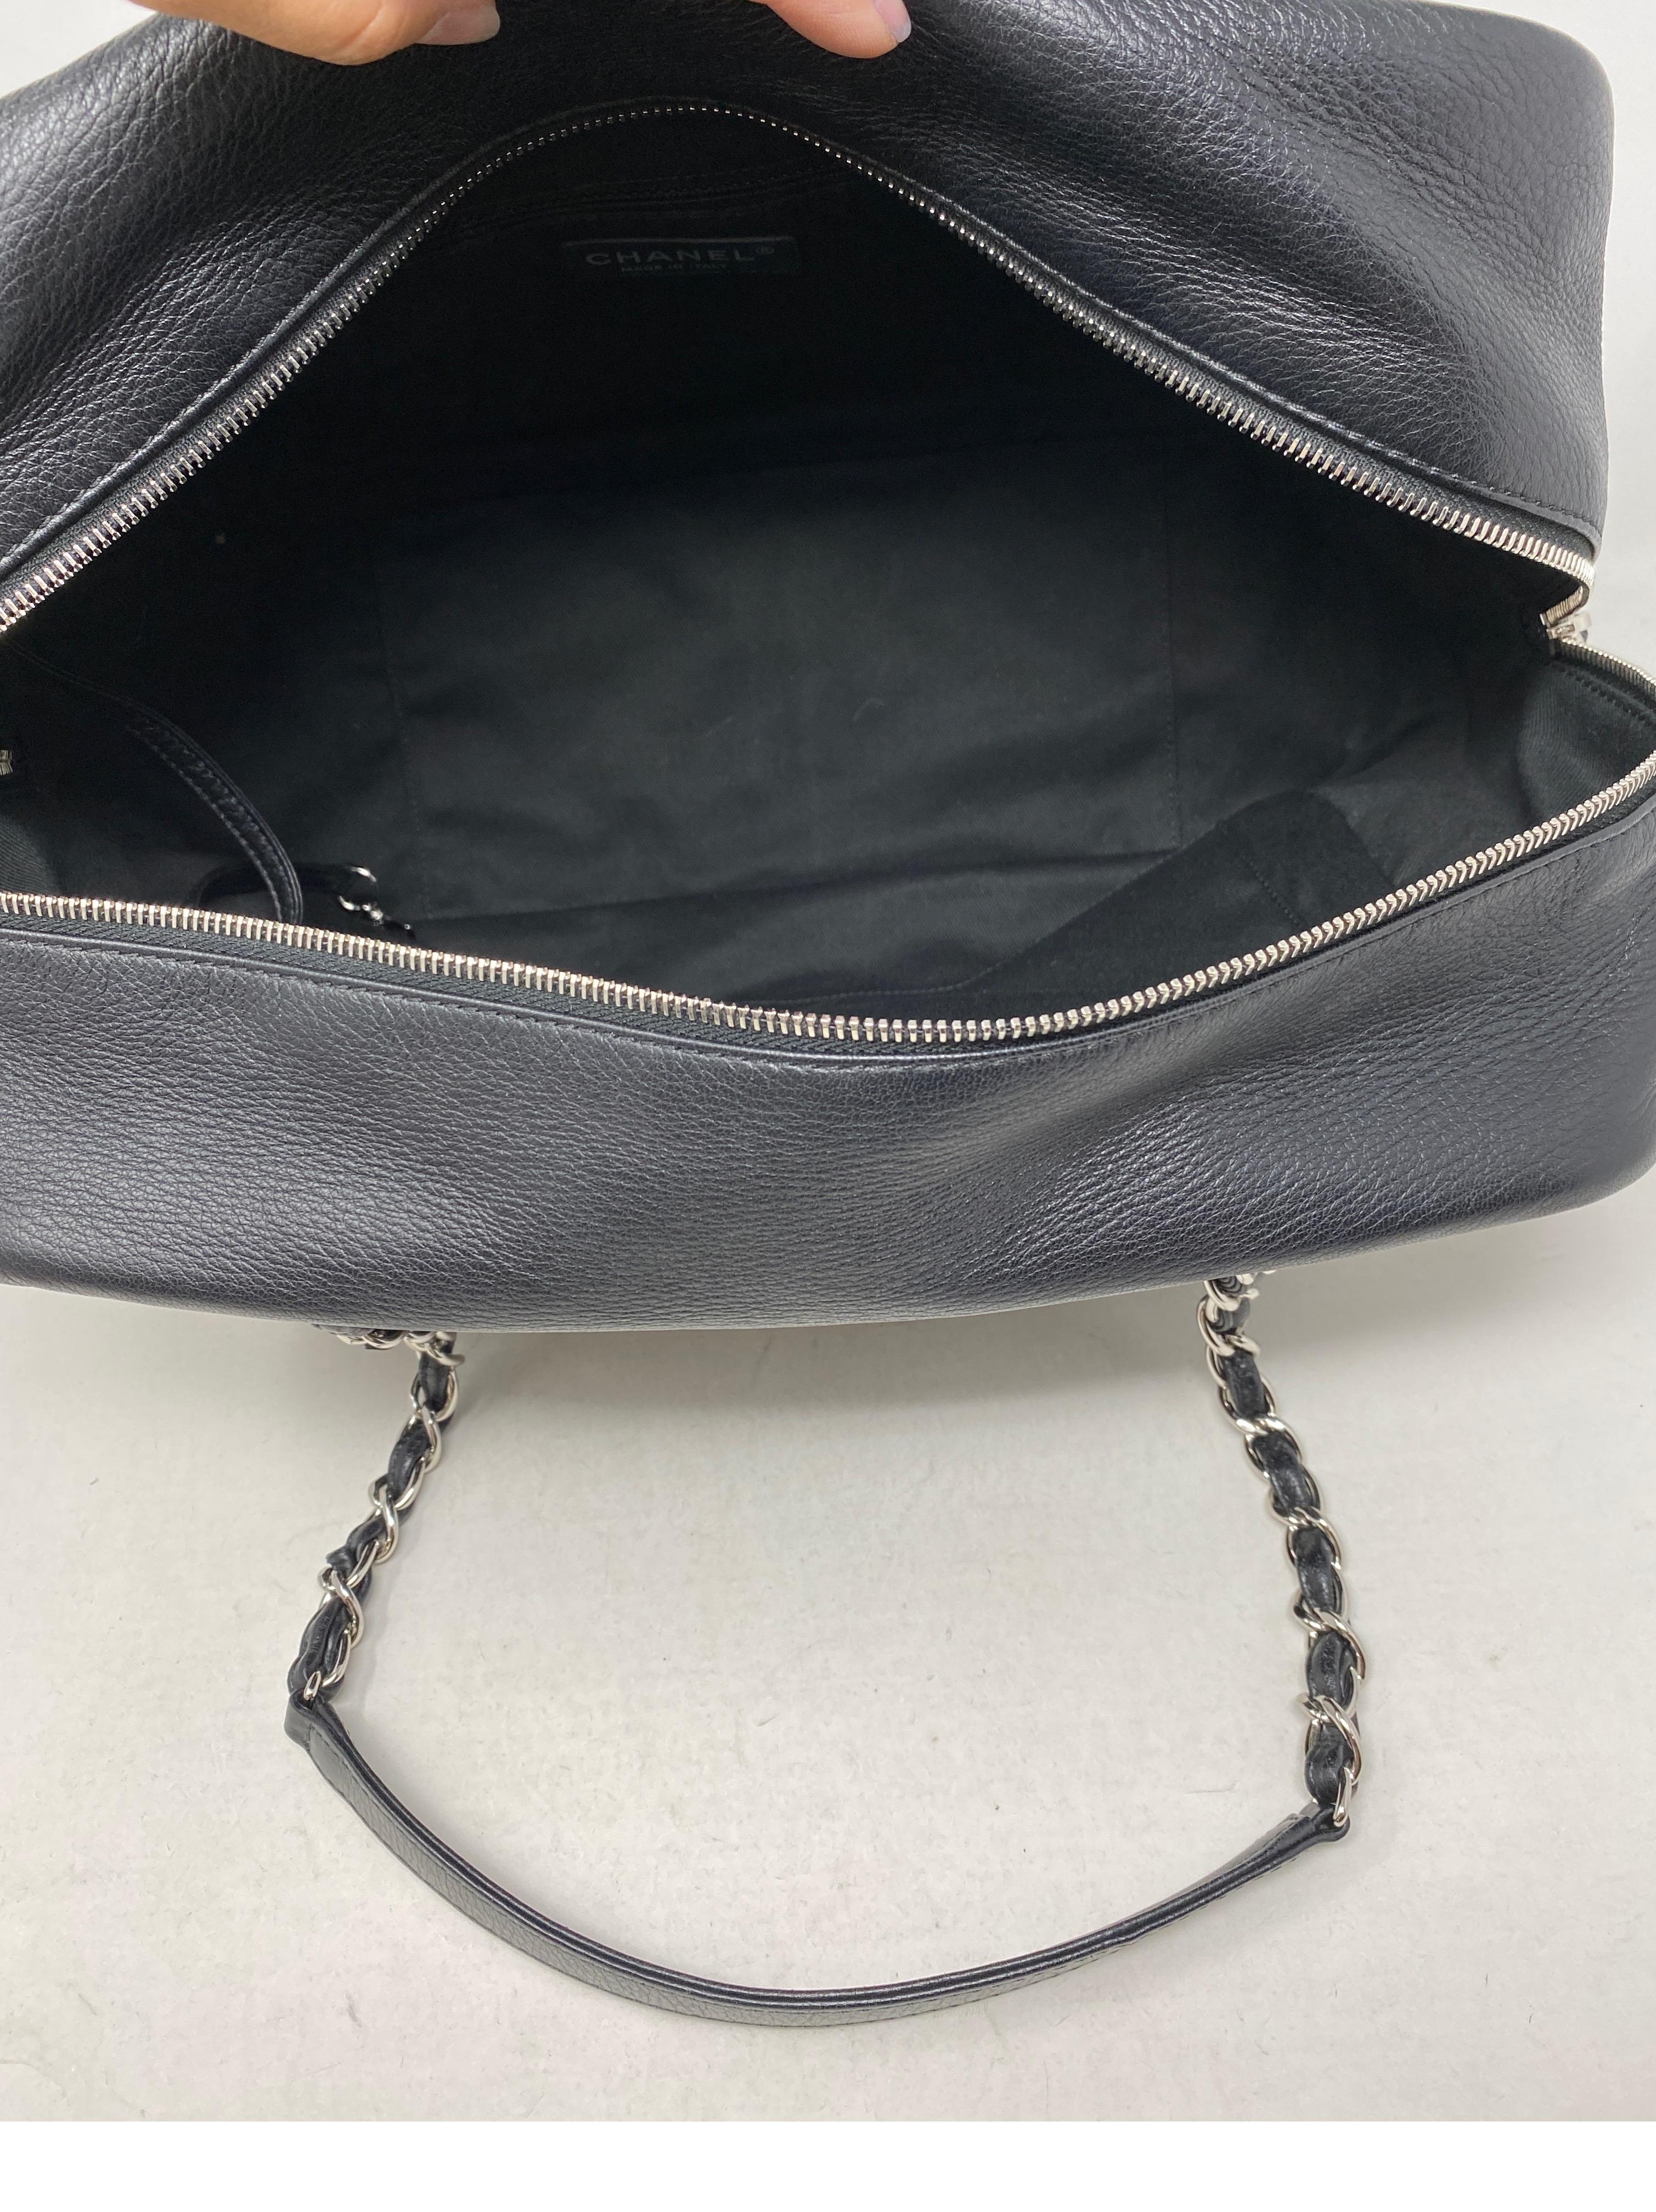 Chanel Black Bowler Tote Bag 5